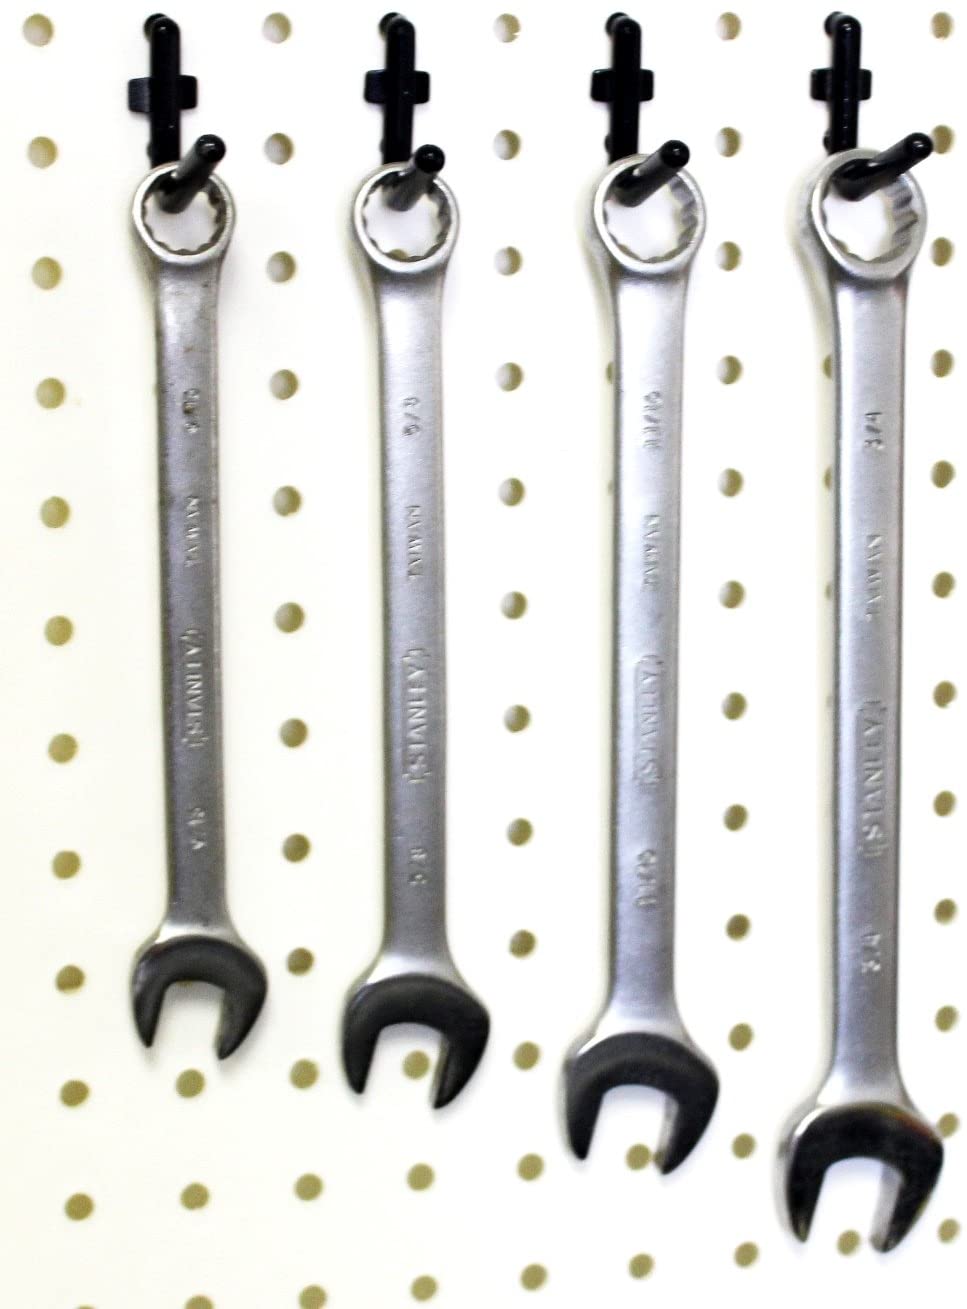 WallPeg Locking PEG Hook Kit - 100 L Pegboard Hooks Tool Storage Garage Organizer Choice B/W (100, Black) - (For 8 piece(s))